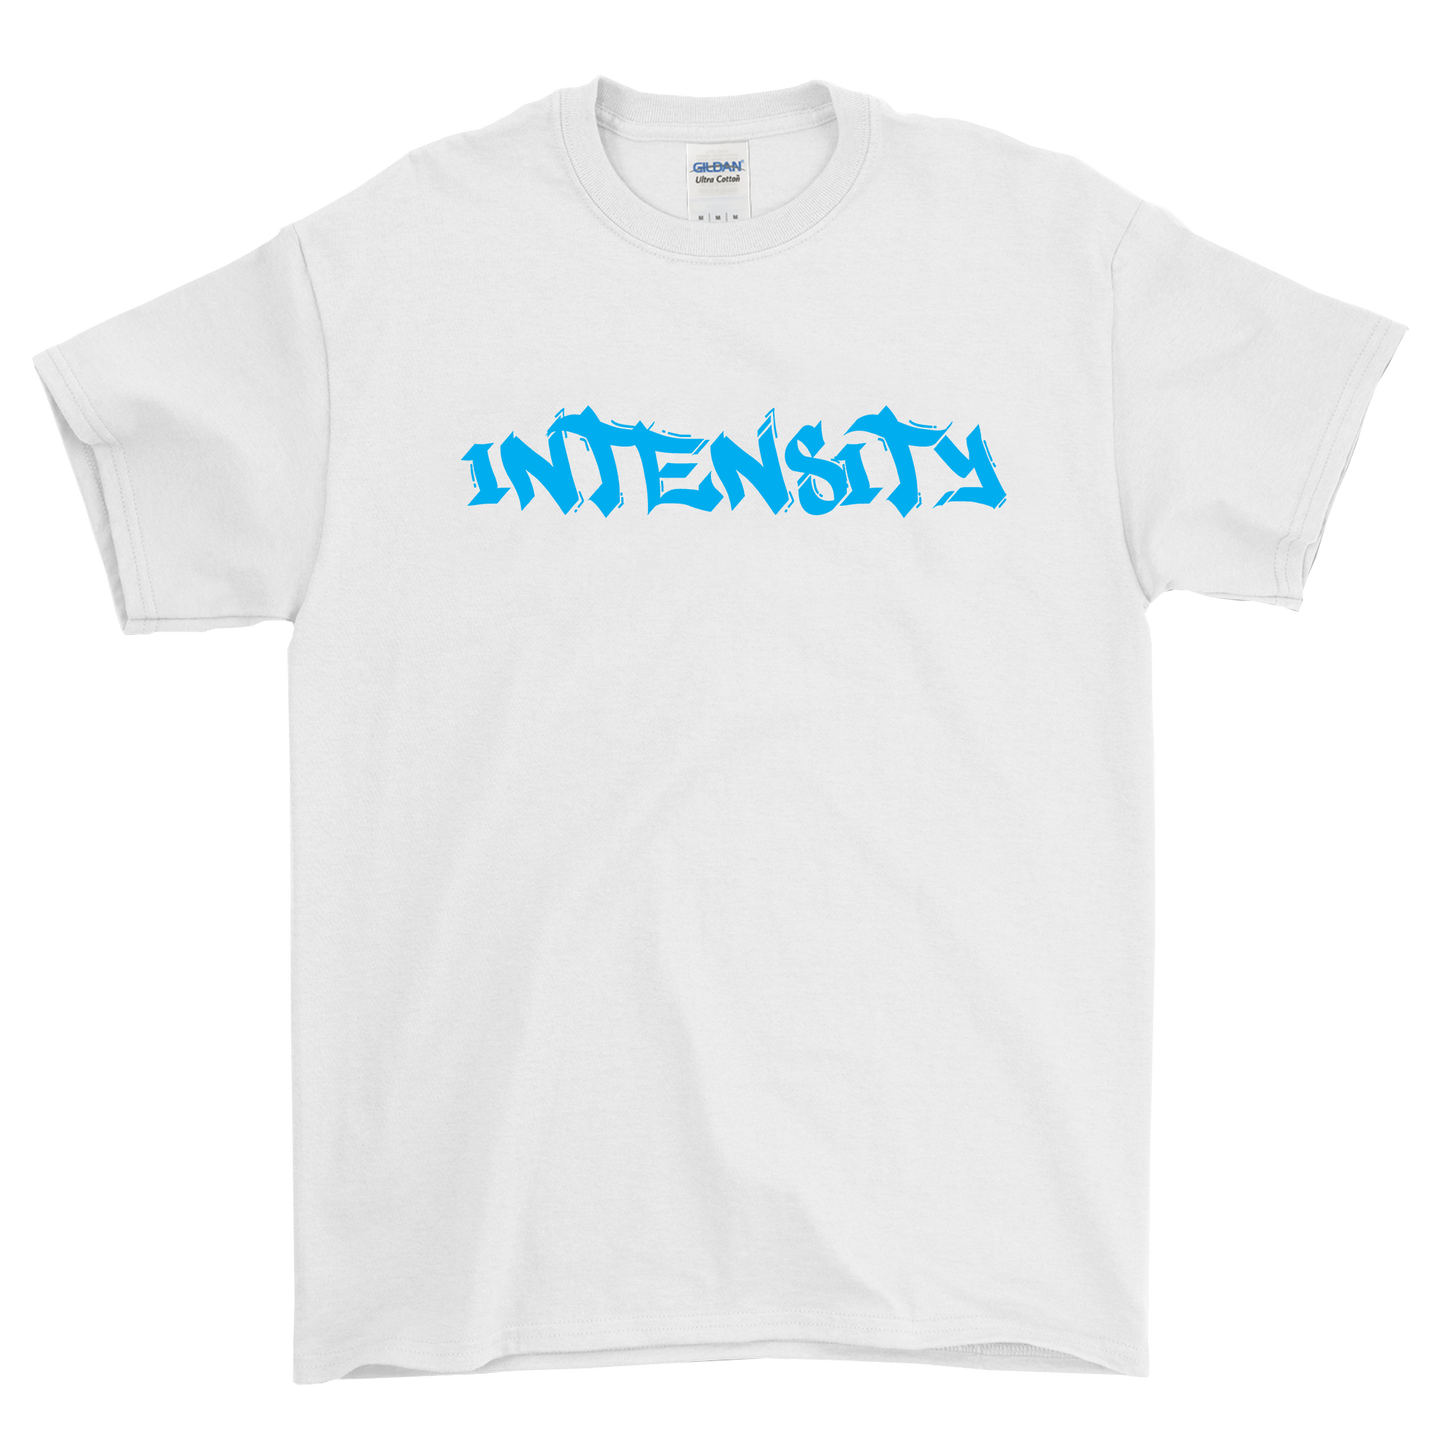 Men's "INTENSITY" Solid White T-Shirt